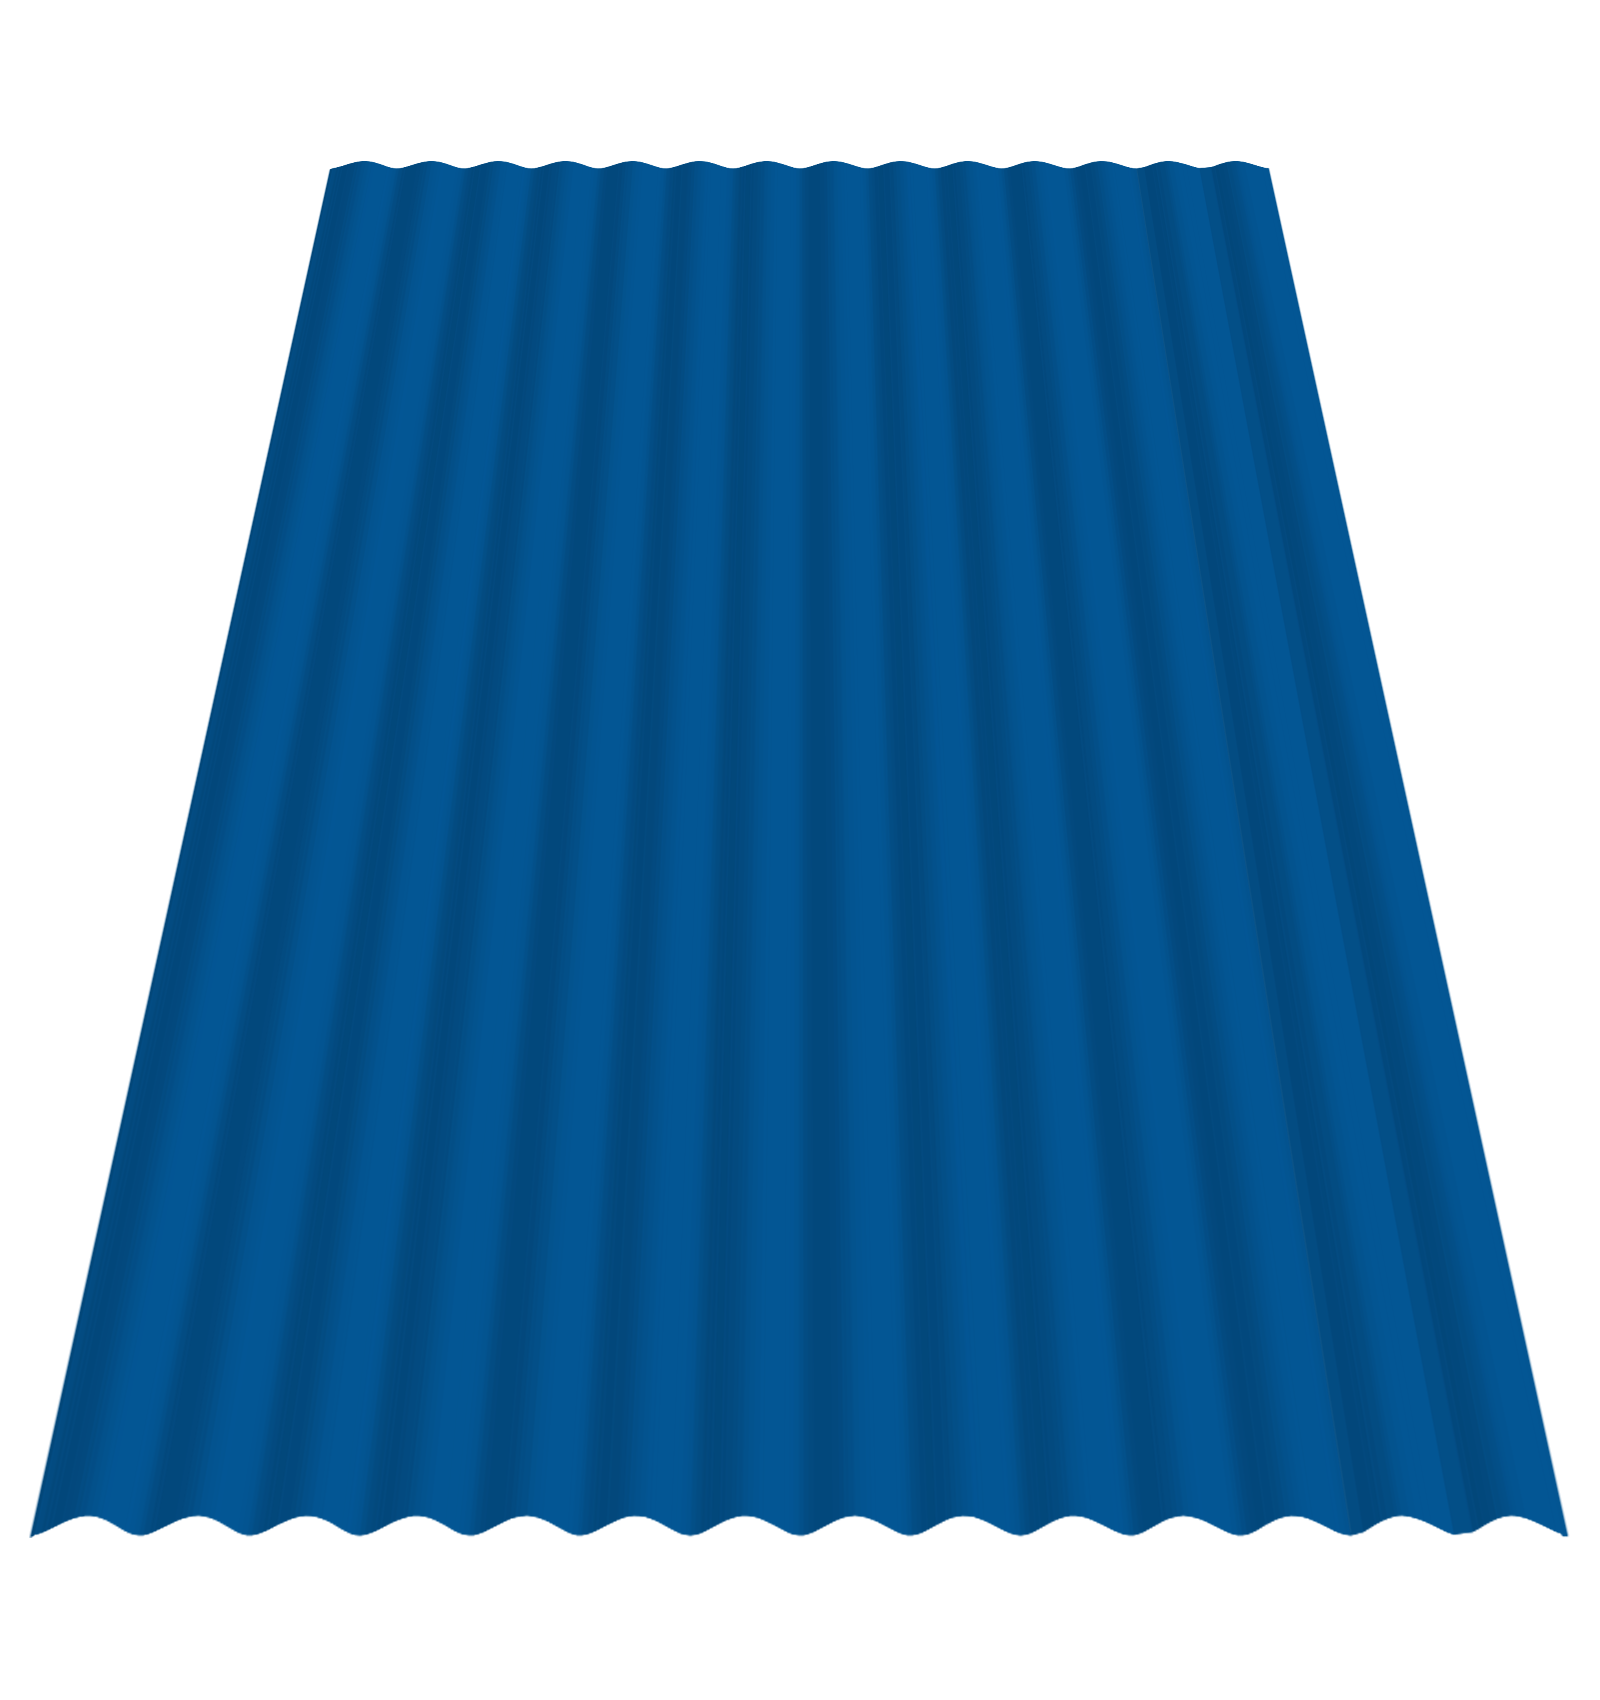 Westman Steel - Roofing - 1/2” CORRUGATED blue print